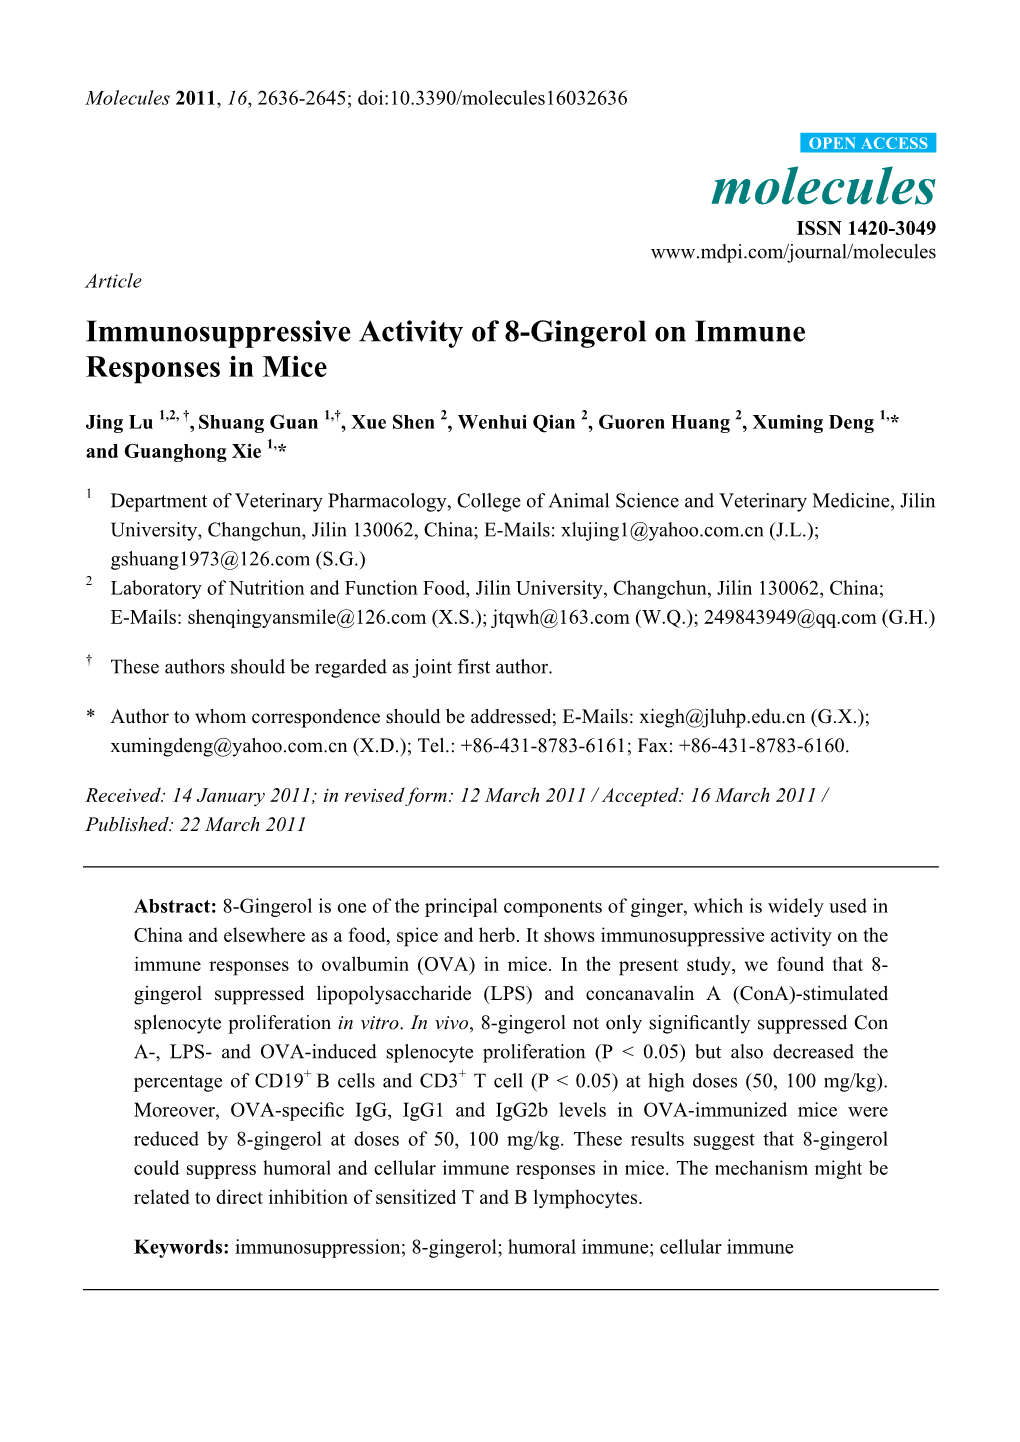 Immunosuppressive Activity of 8-Gingerol on Immune Responses in Mice